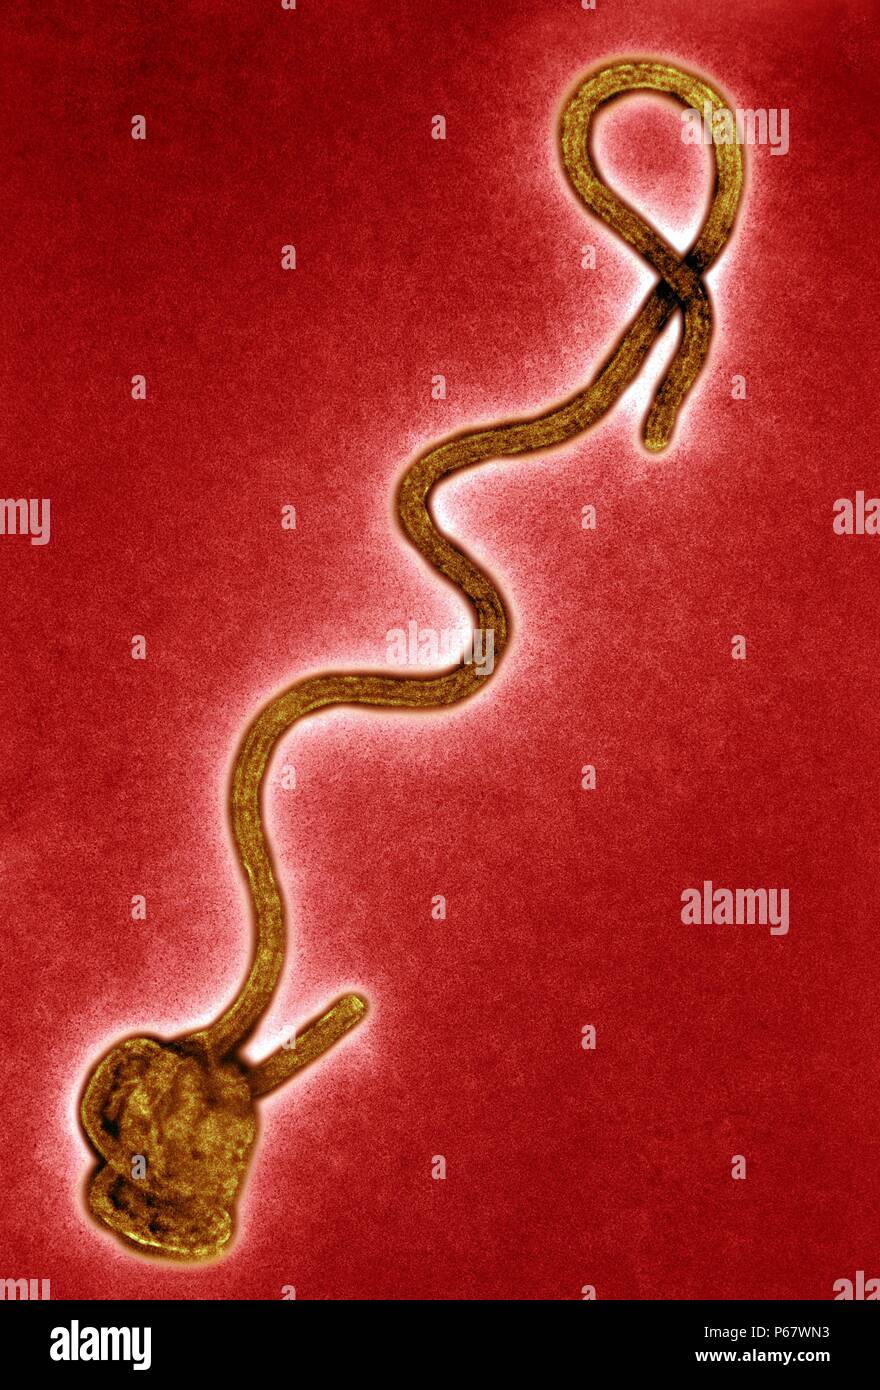 Transmission electron Micrograph of the Ebola Virus Hemorrhagic Fever RNA Virus Stock Photo